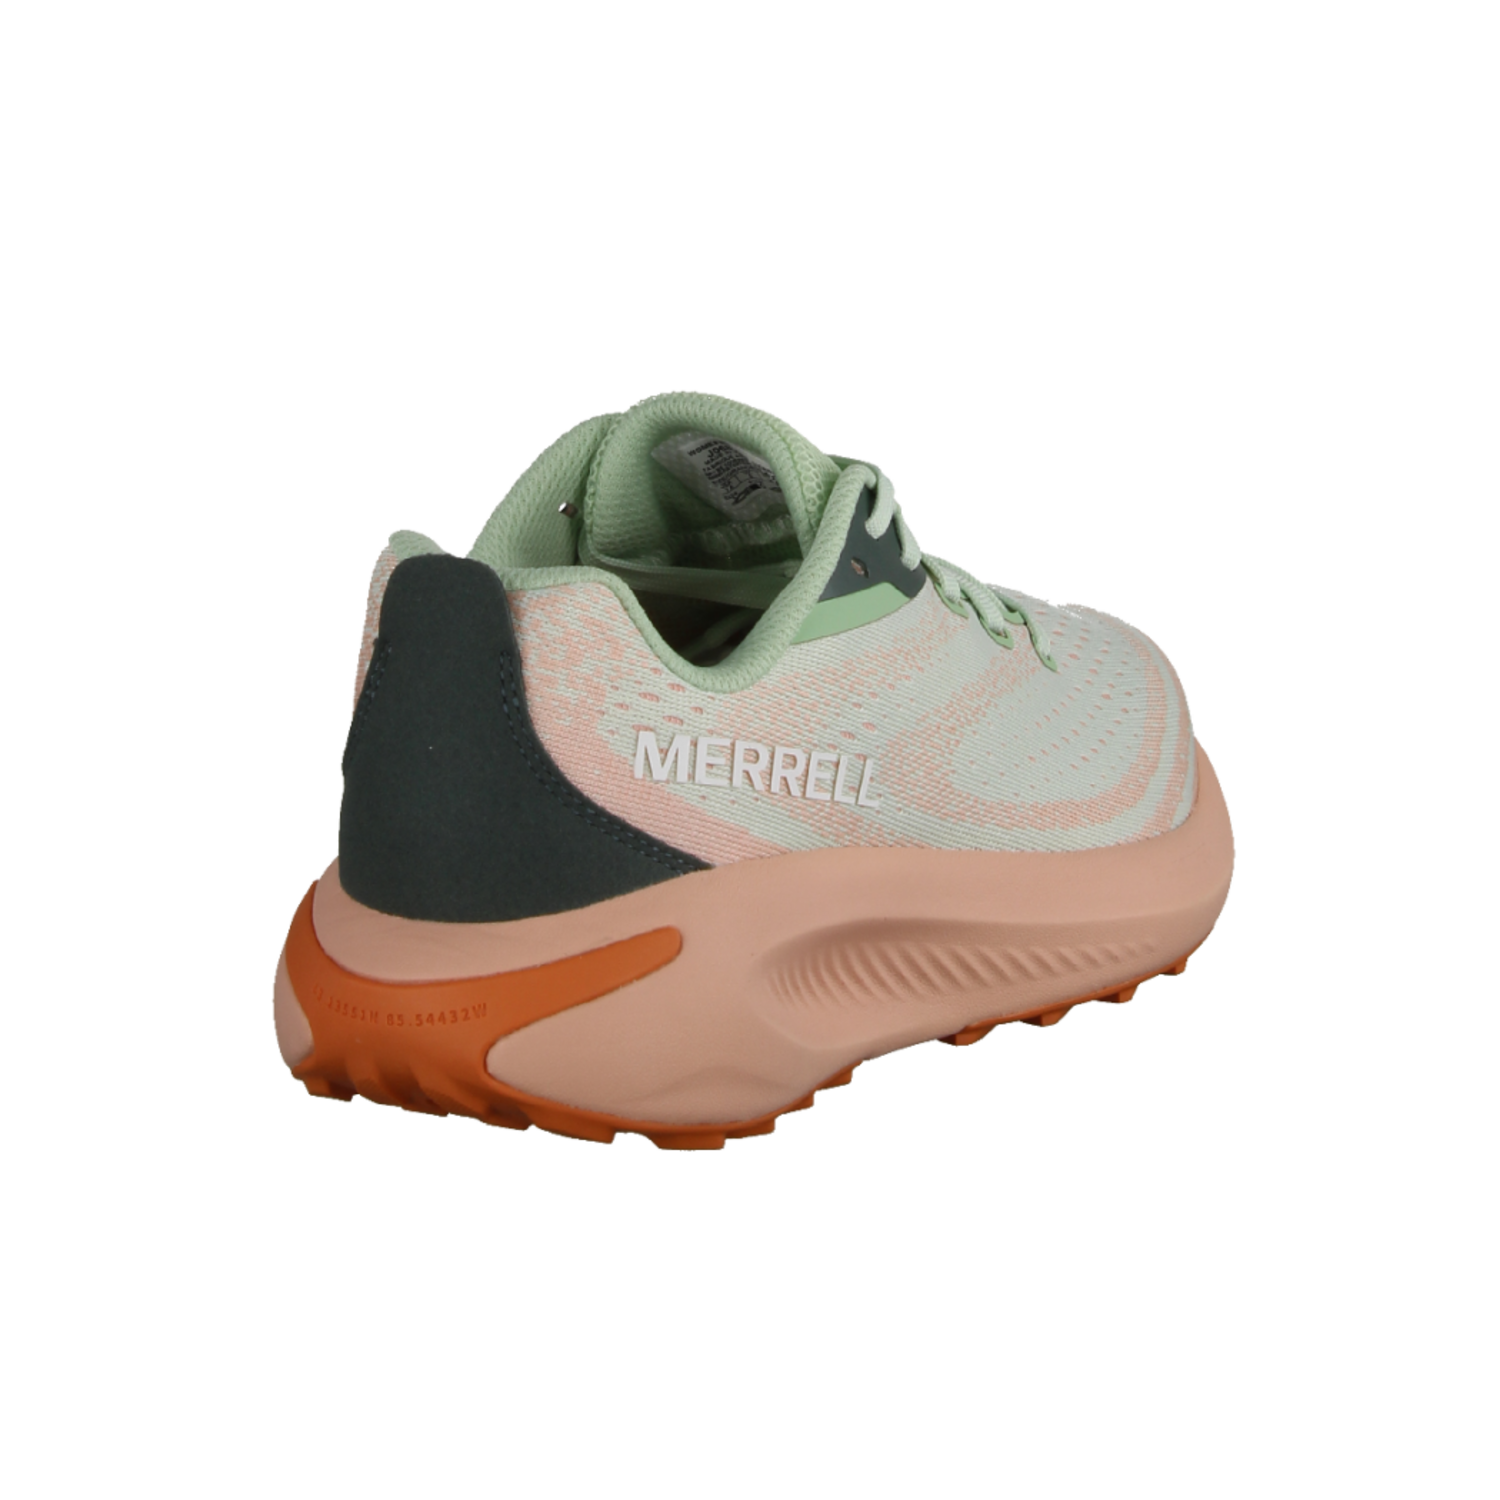 Merrell Morphlite Damenschuhe, Sneaker, Textil/Synthetik, Sarcelle (Grün) - - Bild-2